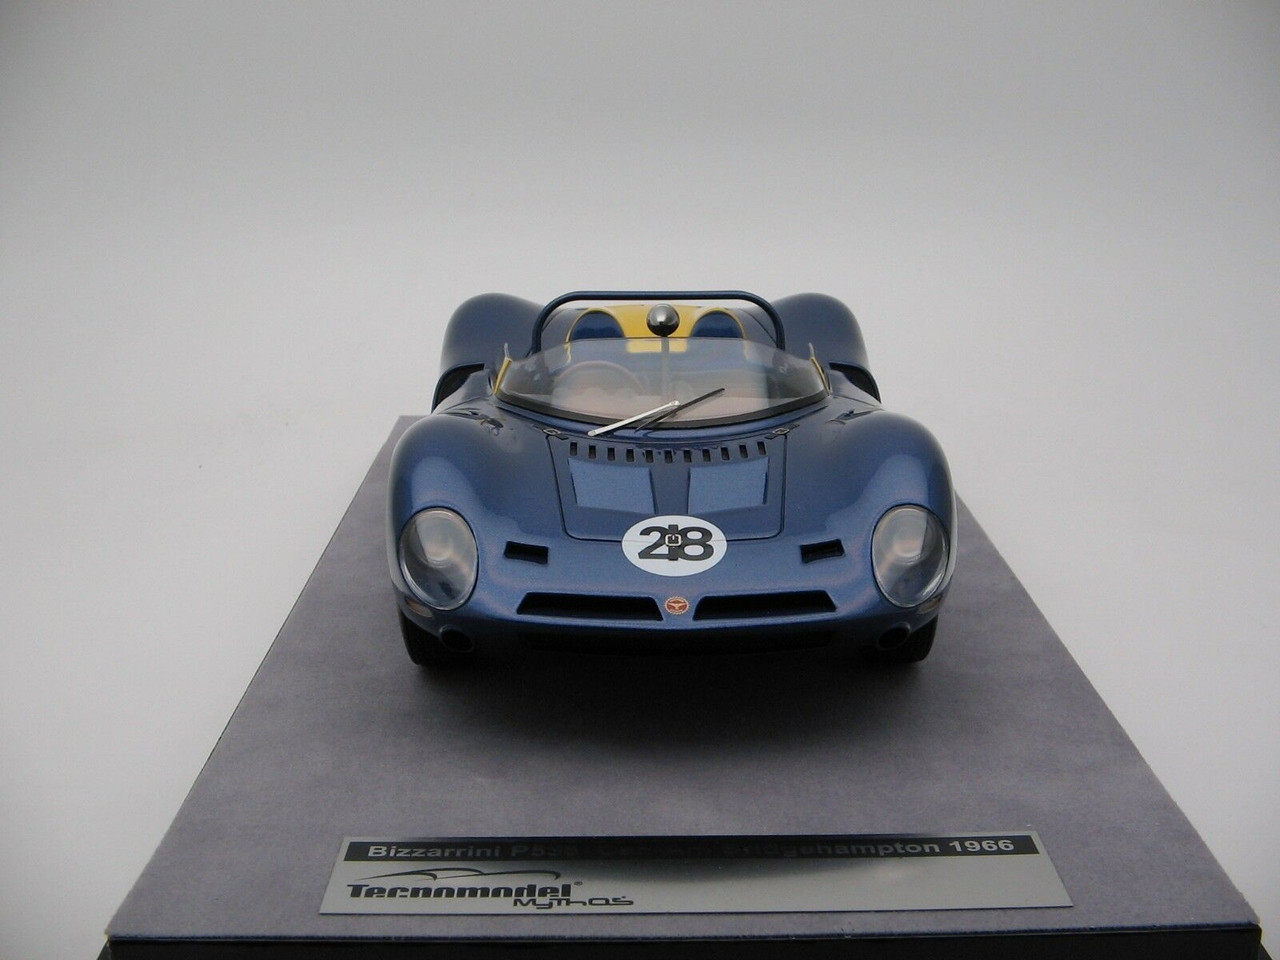 1/18 Scale Tecnomodel Bizzarrini P538 Can-Am Bridghampton 1966 M. Gammino #28 Resin Car Model Limited 100 Pieces